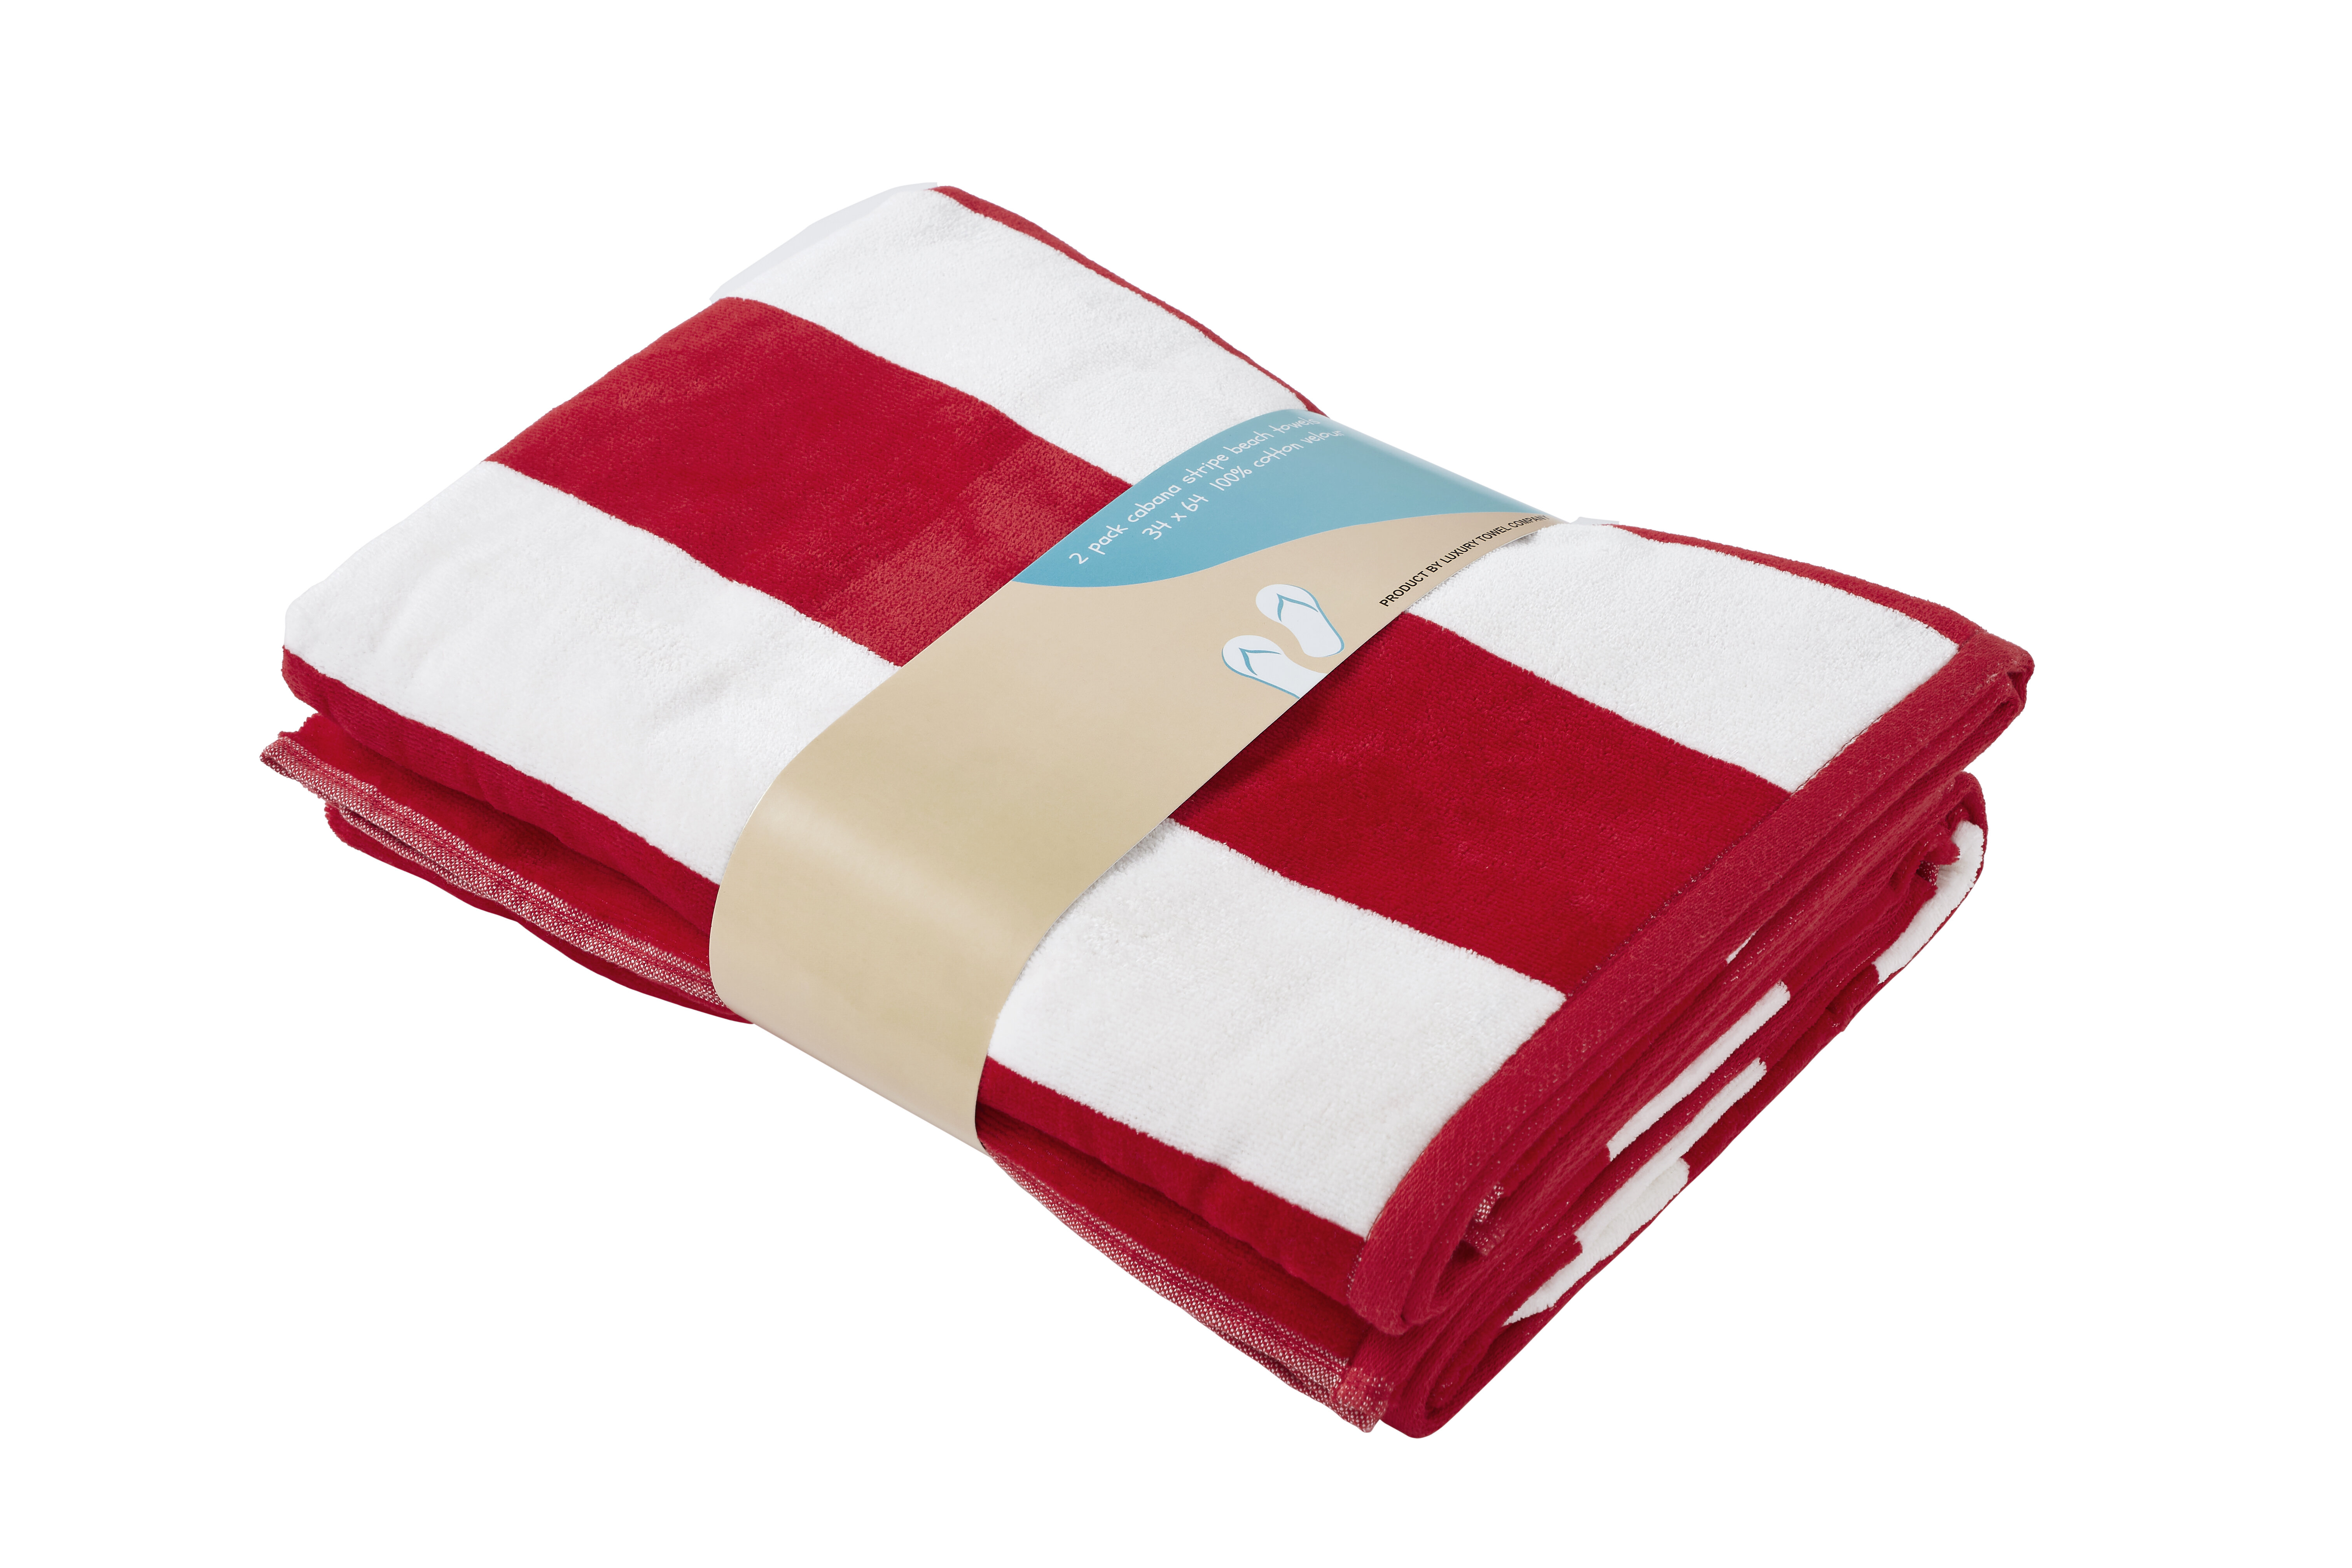 Satin Stripe 4pc Set - The Turkish Towel Company